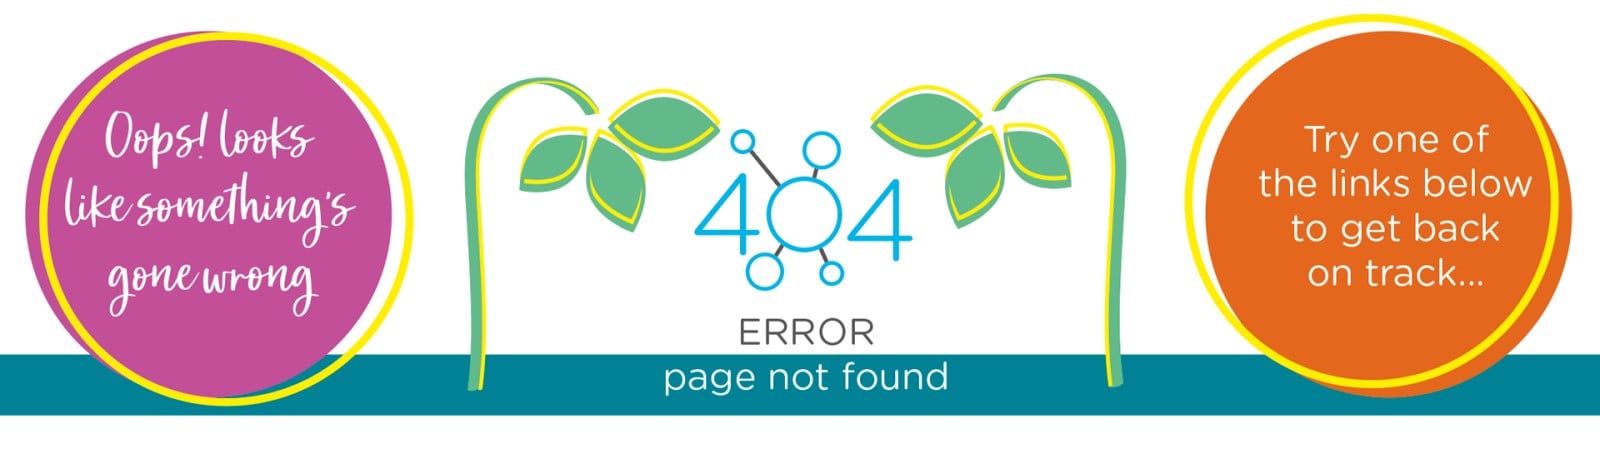 404 banner image for growth and skills hub